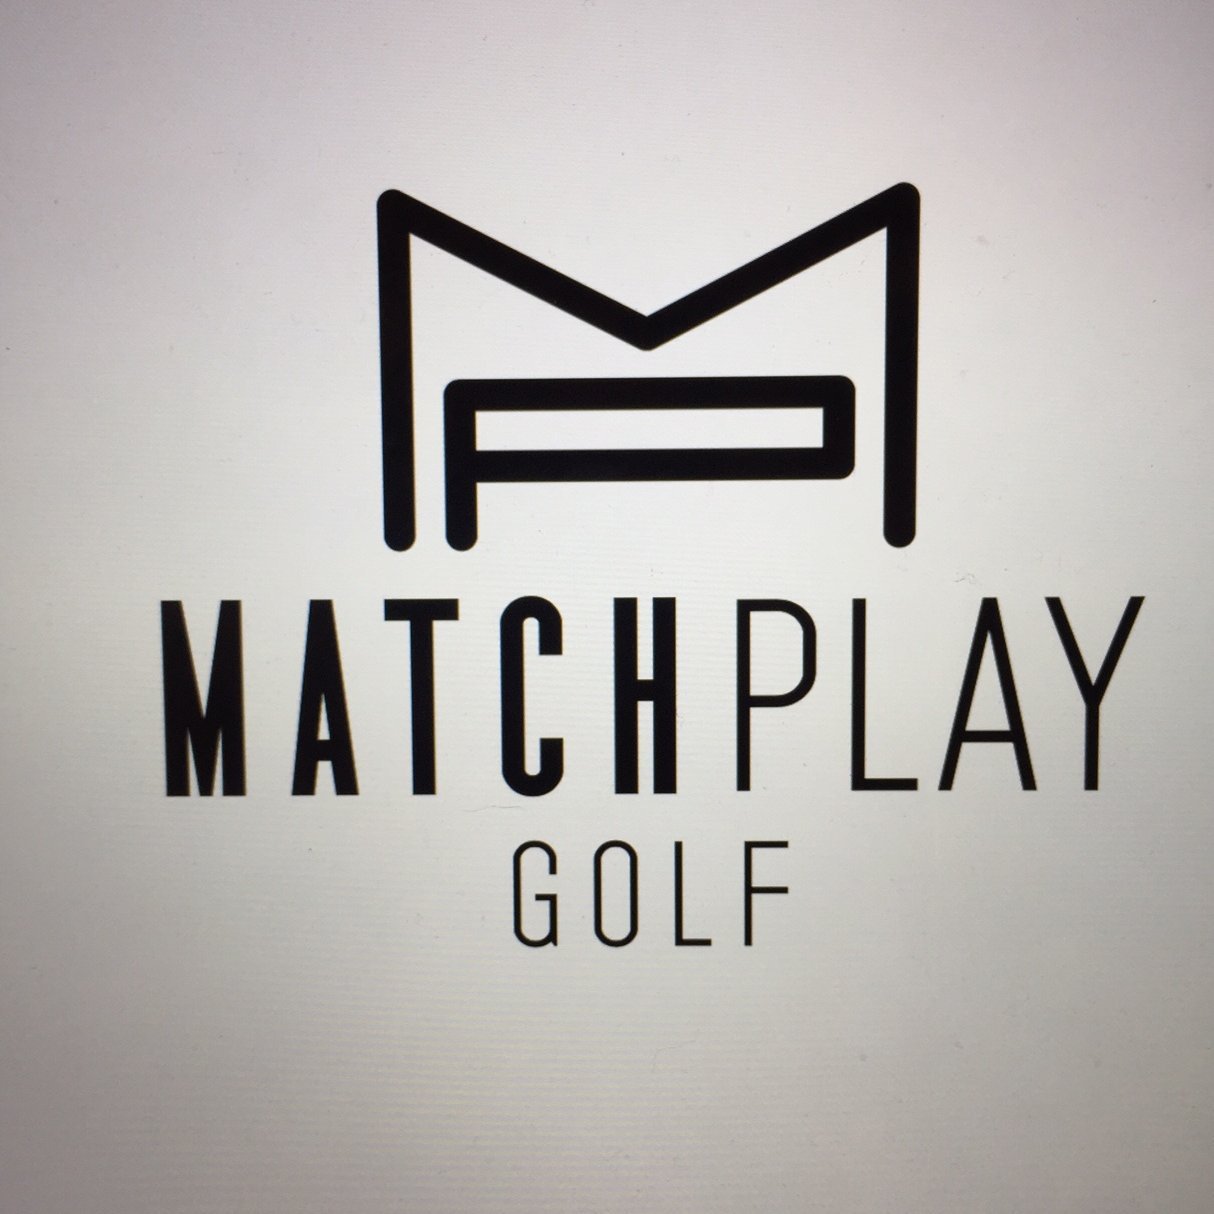 Quinta edición Circuito Nacional de Golf en formato MatchPlay por parejas. Organiza @summumgolf con 2.000 participantes inscritos en 55 campos españoles ⛳️🏆🔝